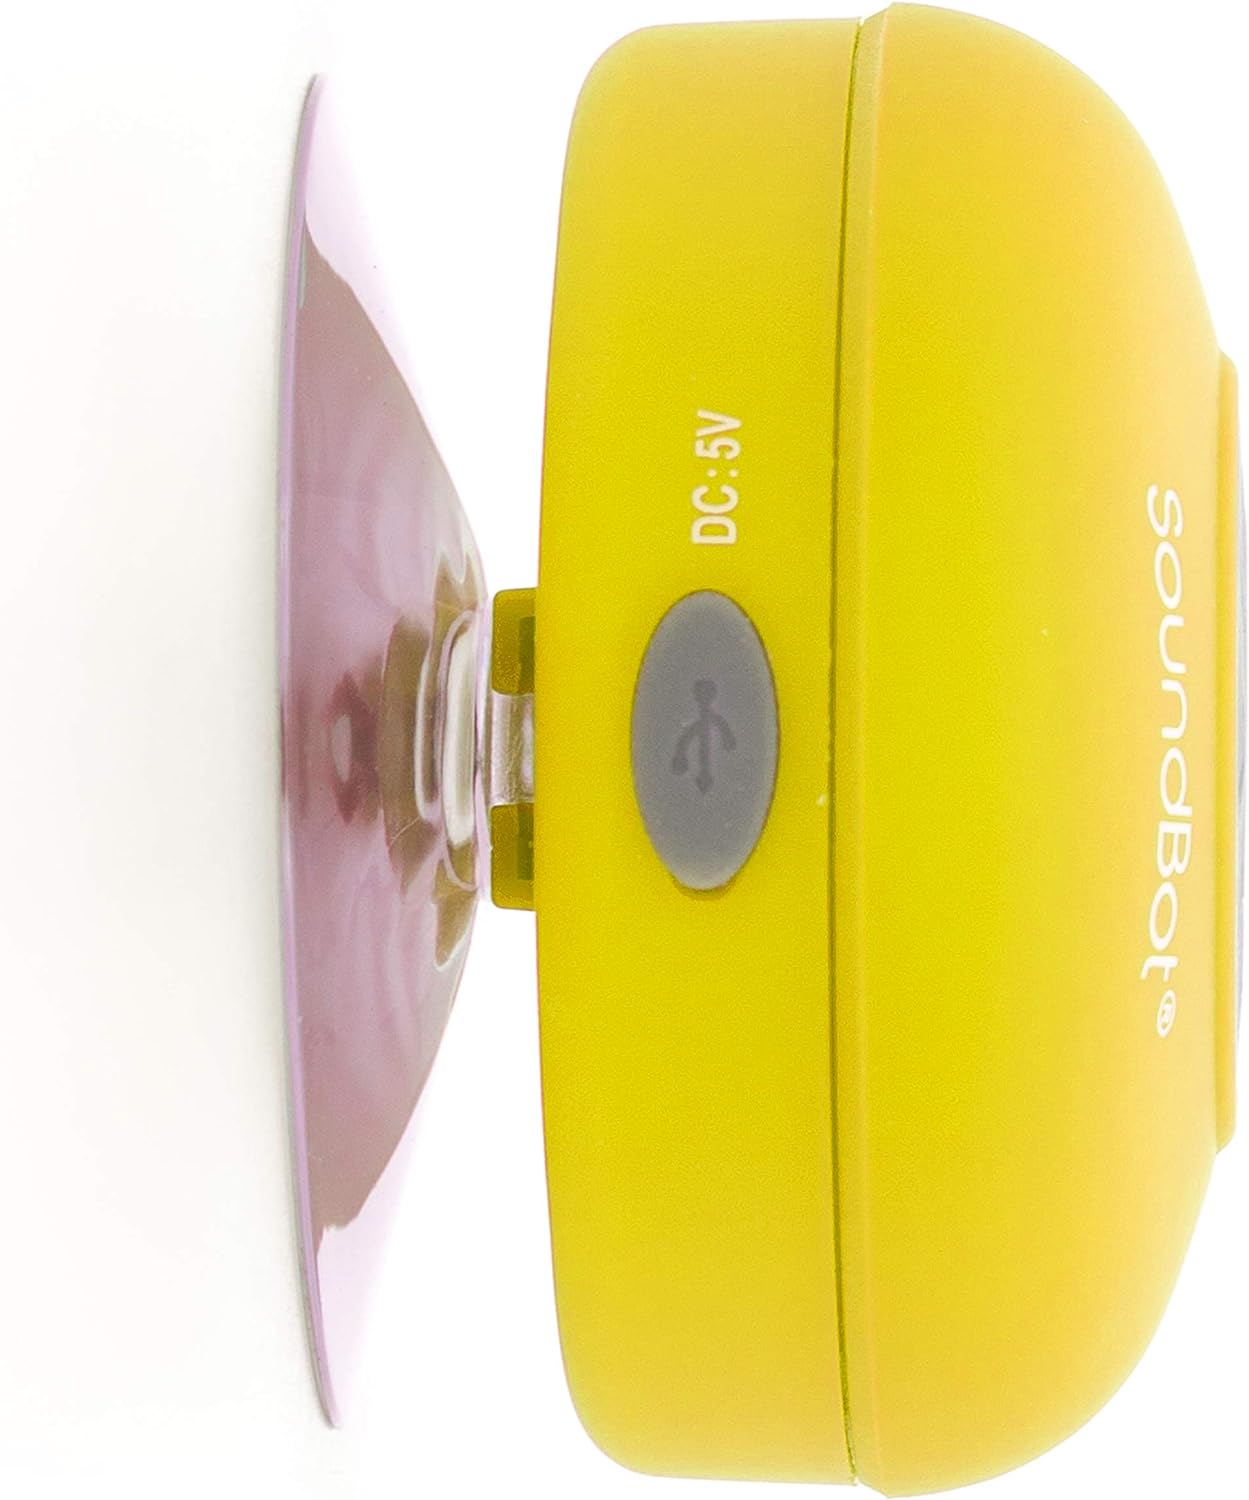 SoundBot 1.59 oz Portable Bluetooth Speaker, Yellow, SB510 - image 6 of 8